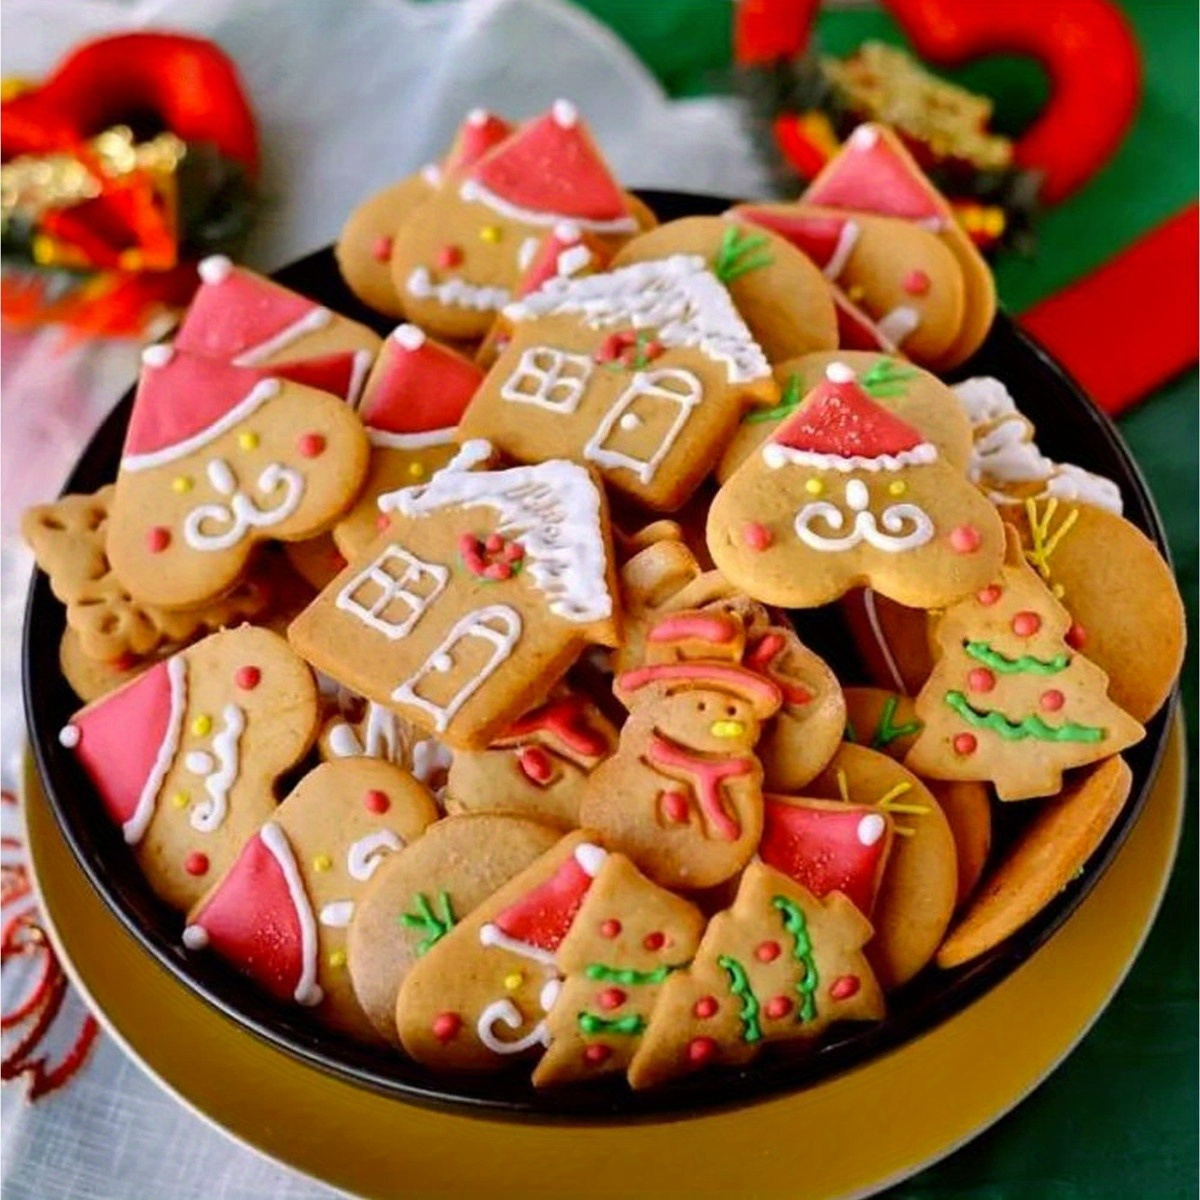 Cookies for Santa, Baking Set